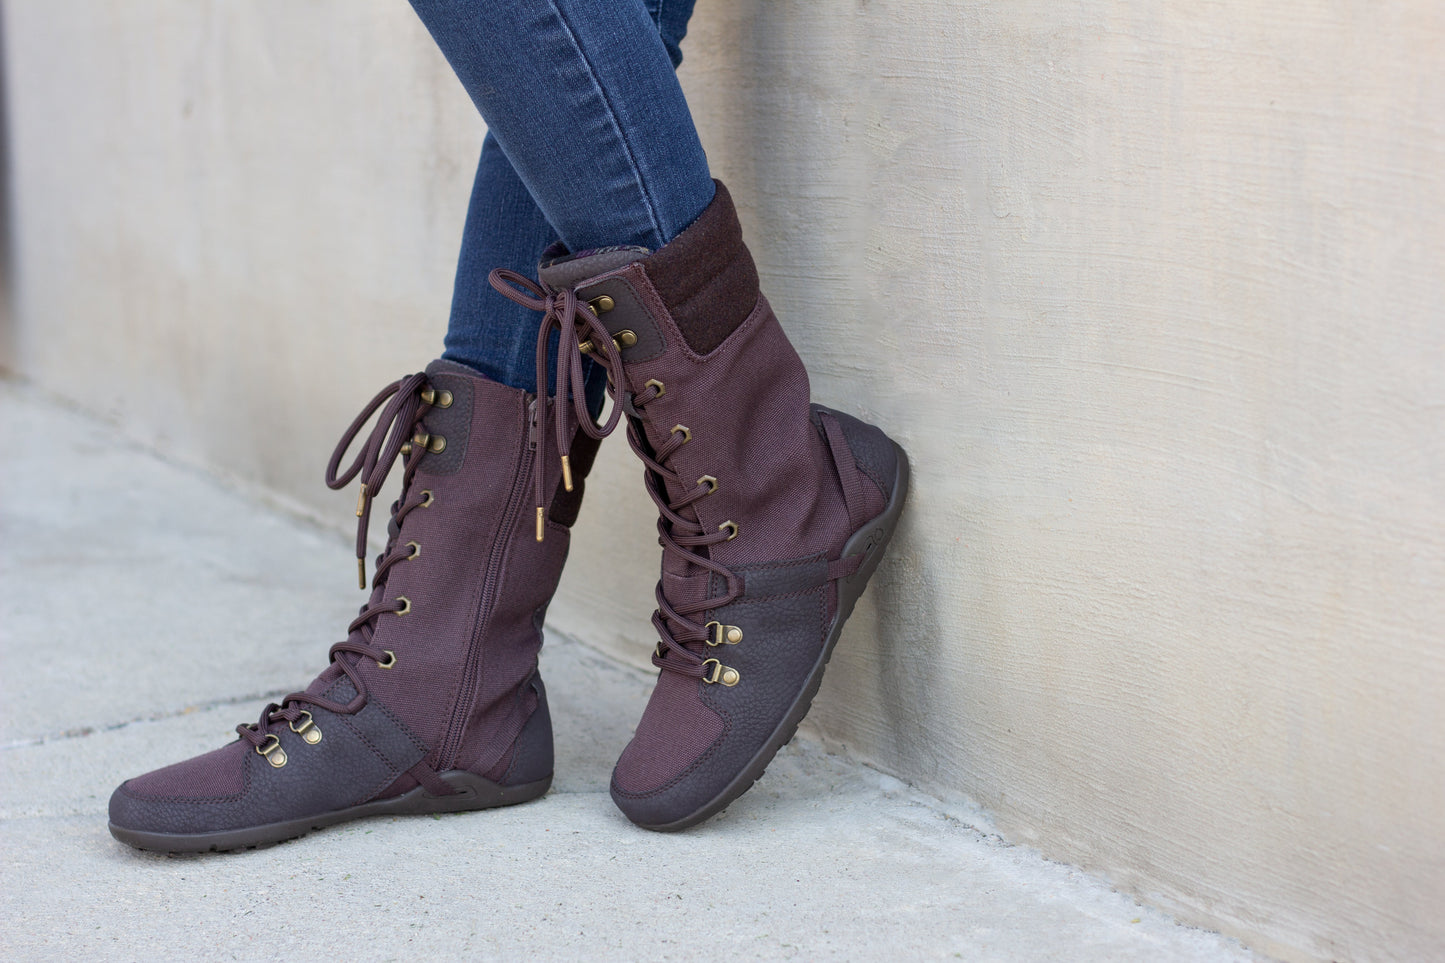 Xero Shoes Mika barfods vinterstøvler til kvinder i farven chocolate plum, lifestyle